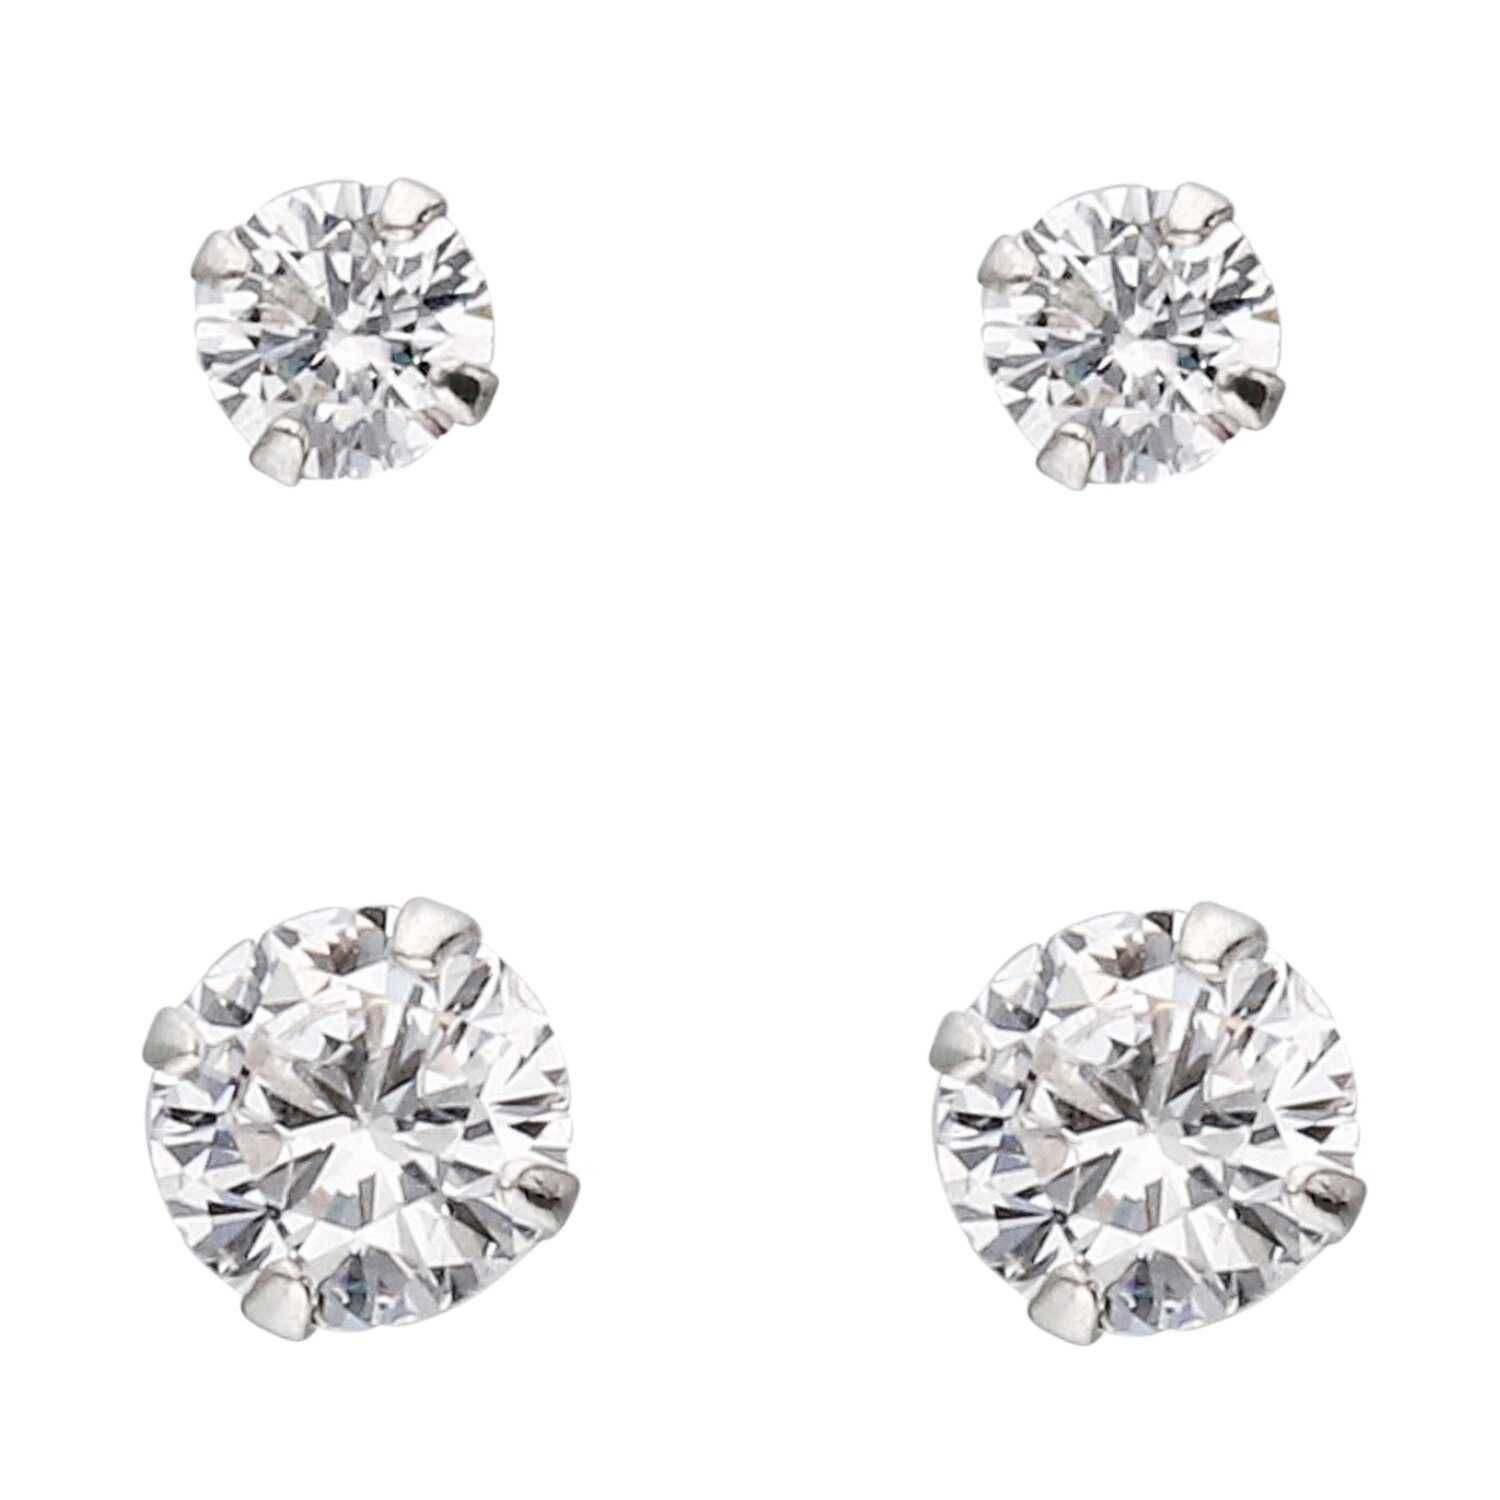 I AM Jewelry Silver Zirconia Stud Earring Set, 4CT , CVS